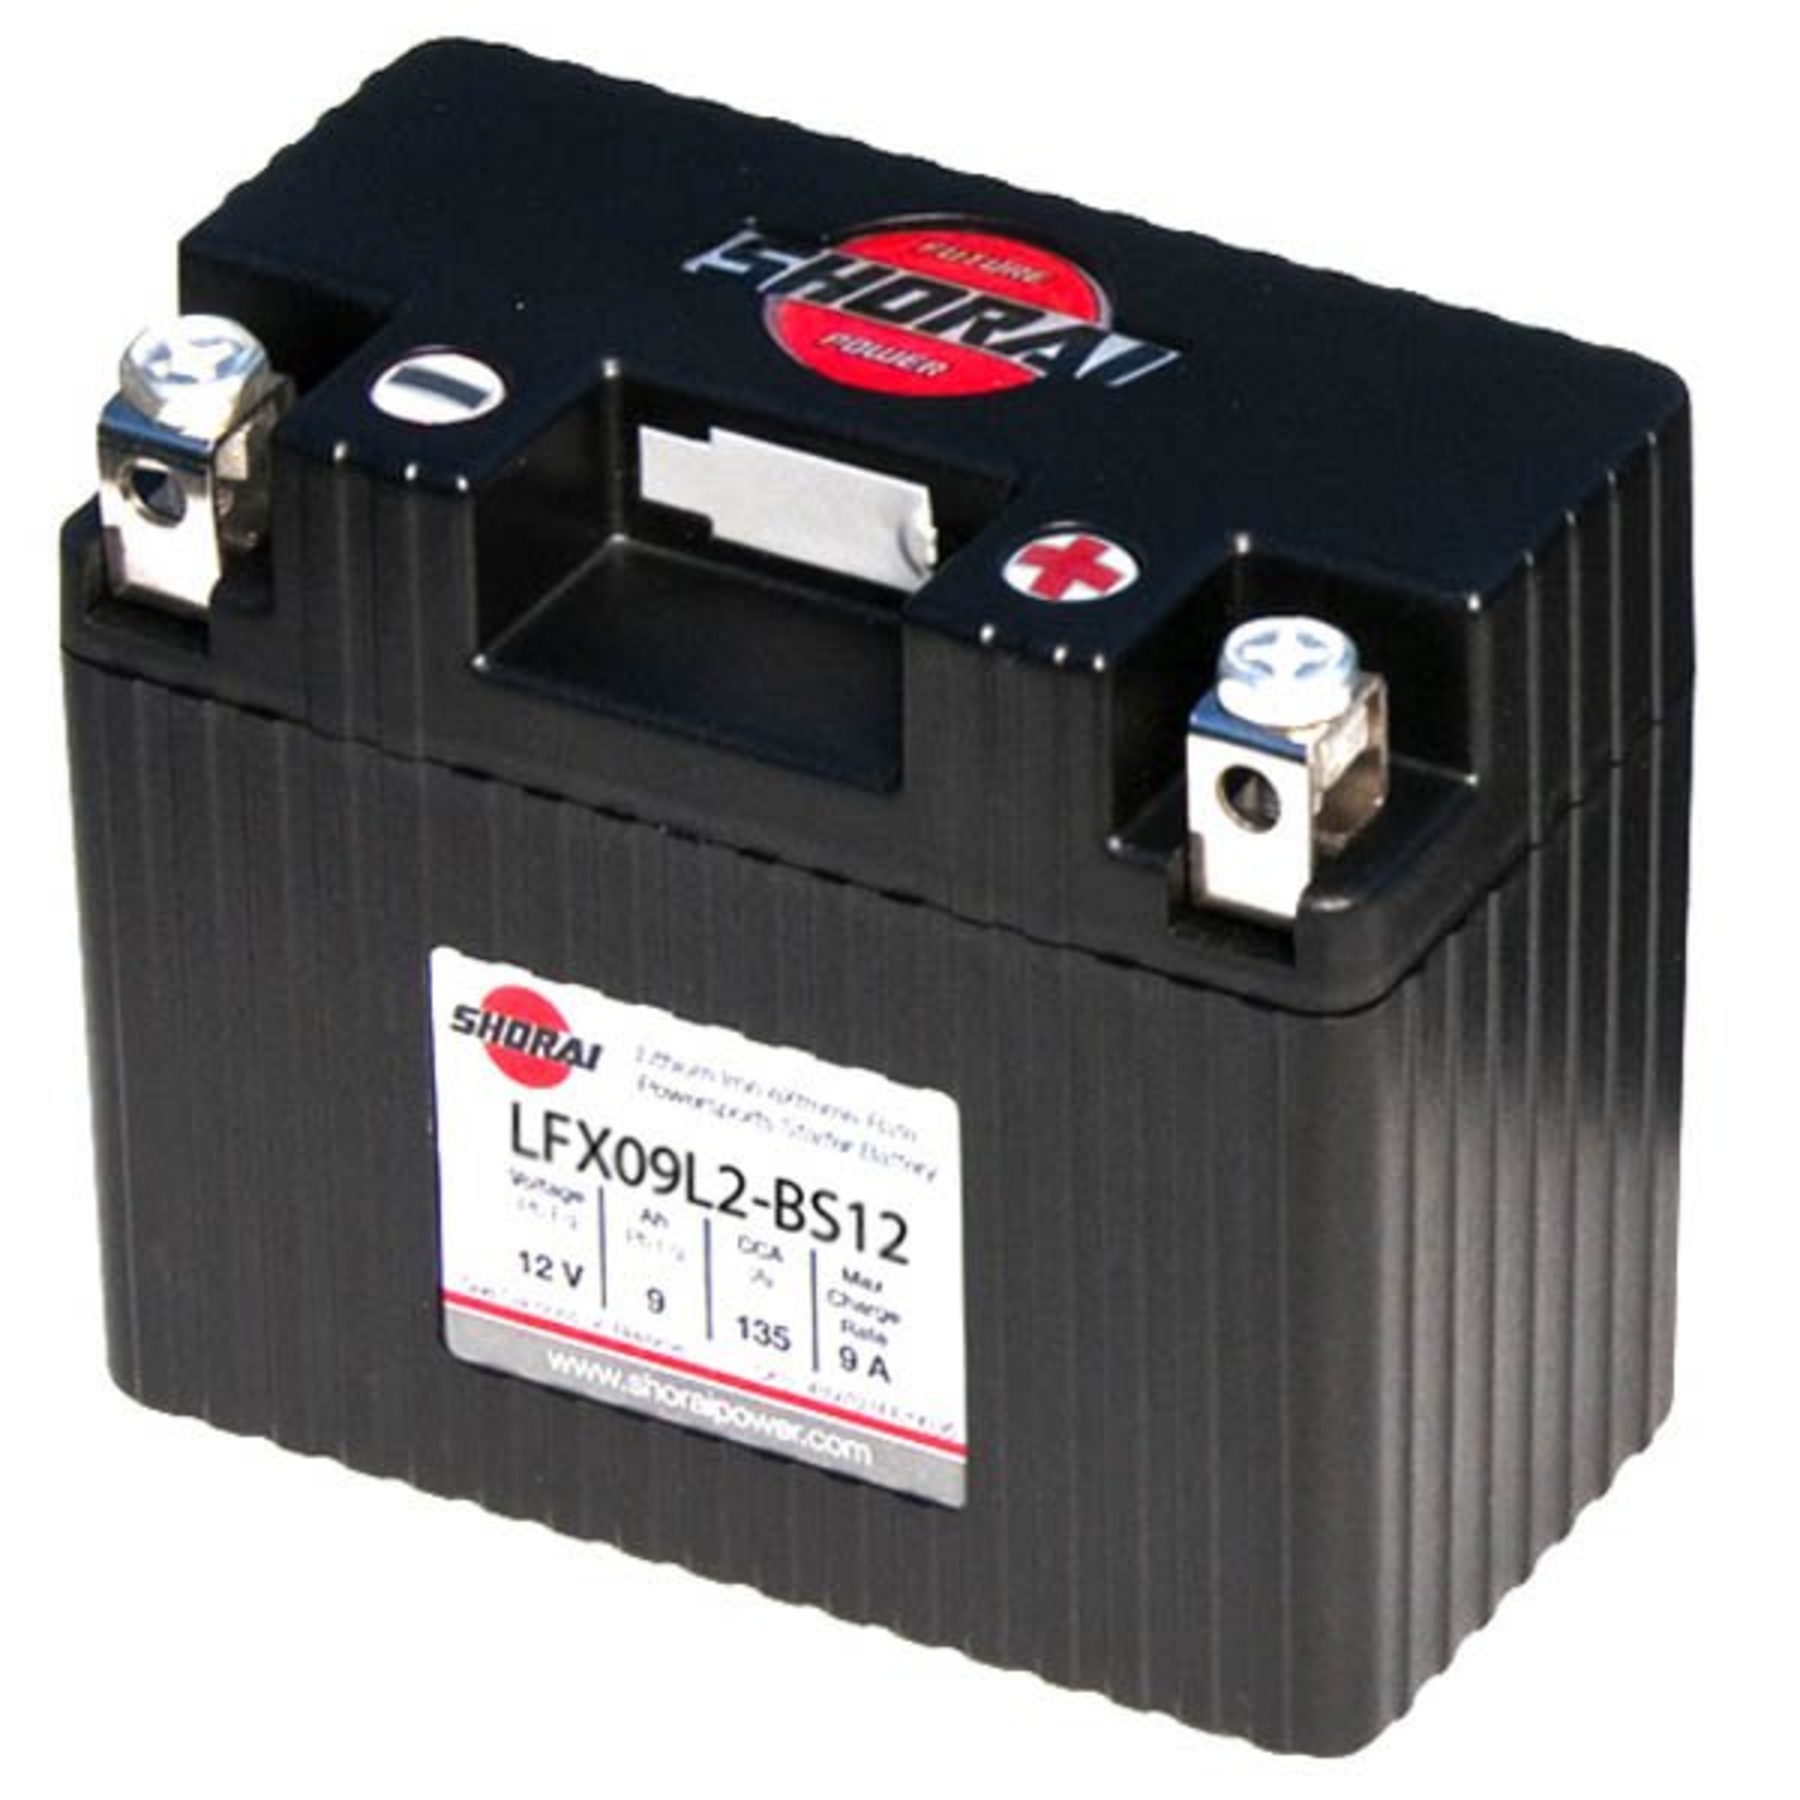 LiFePO4 Battery | 9ah 12v Lithium Motorcycle / ATV Batteries LFX09L2-Bs12